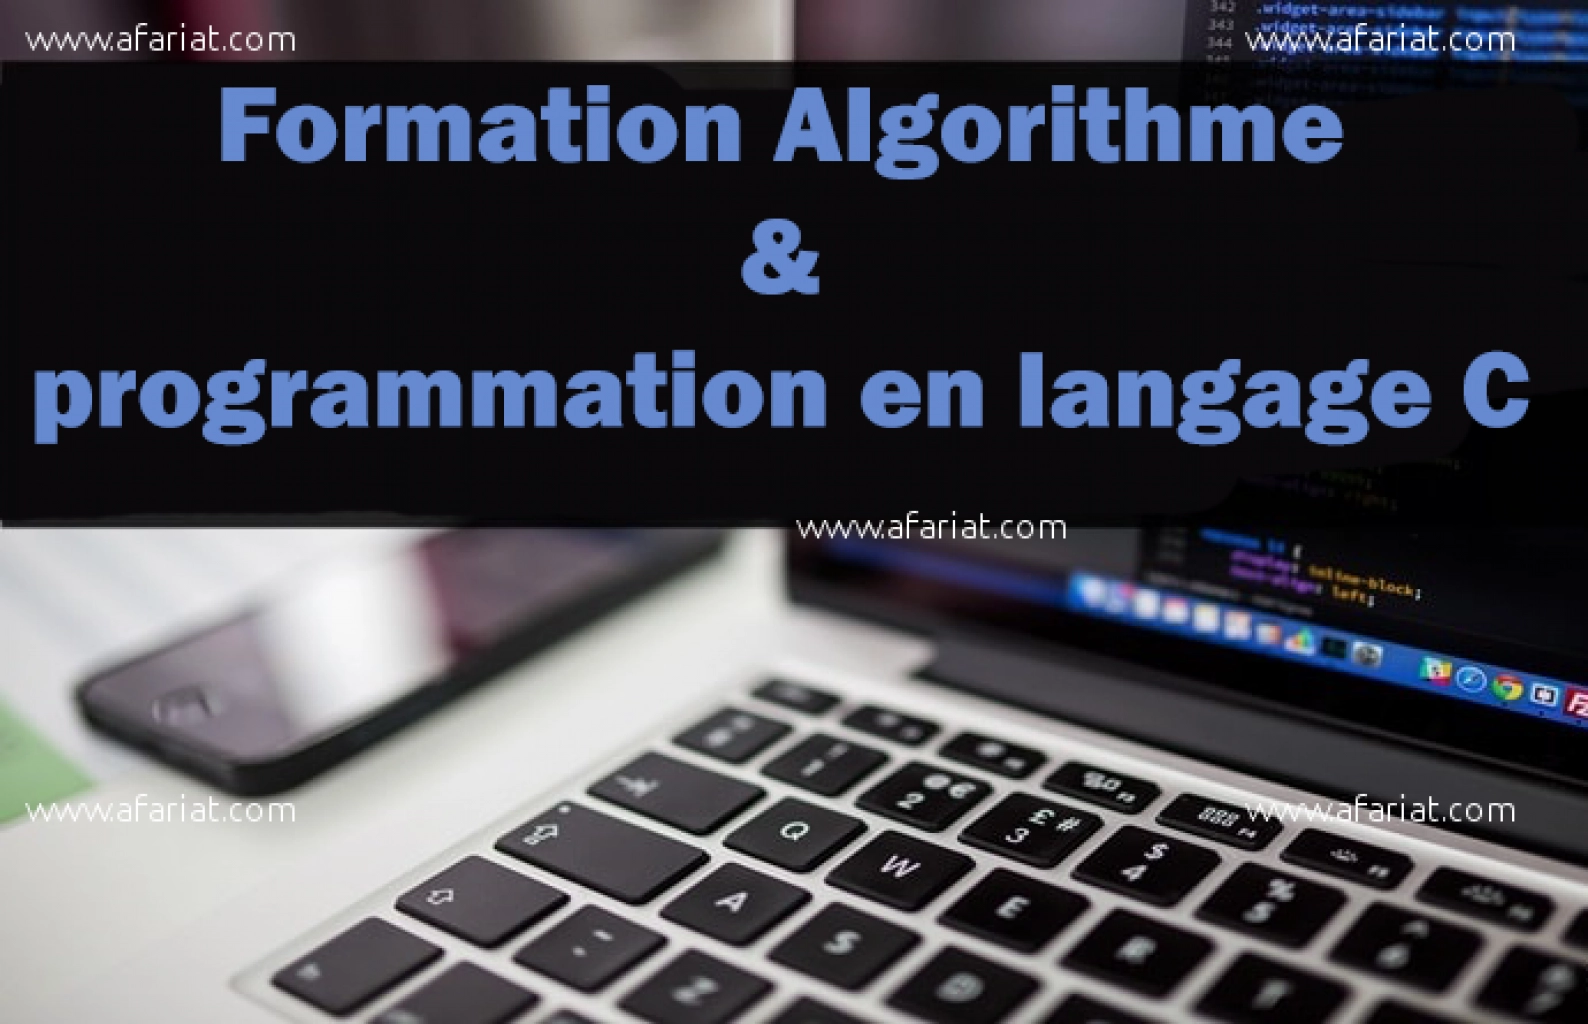 Formation Algorithme & programmation